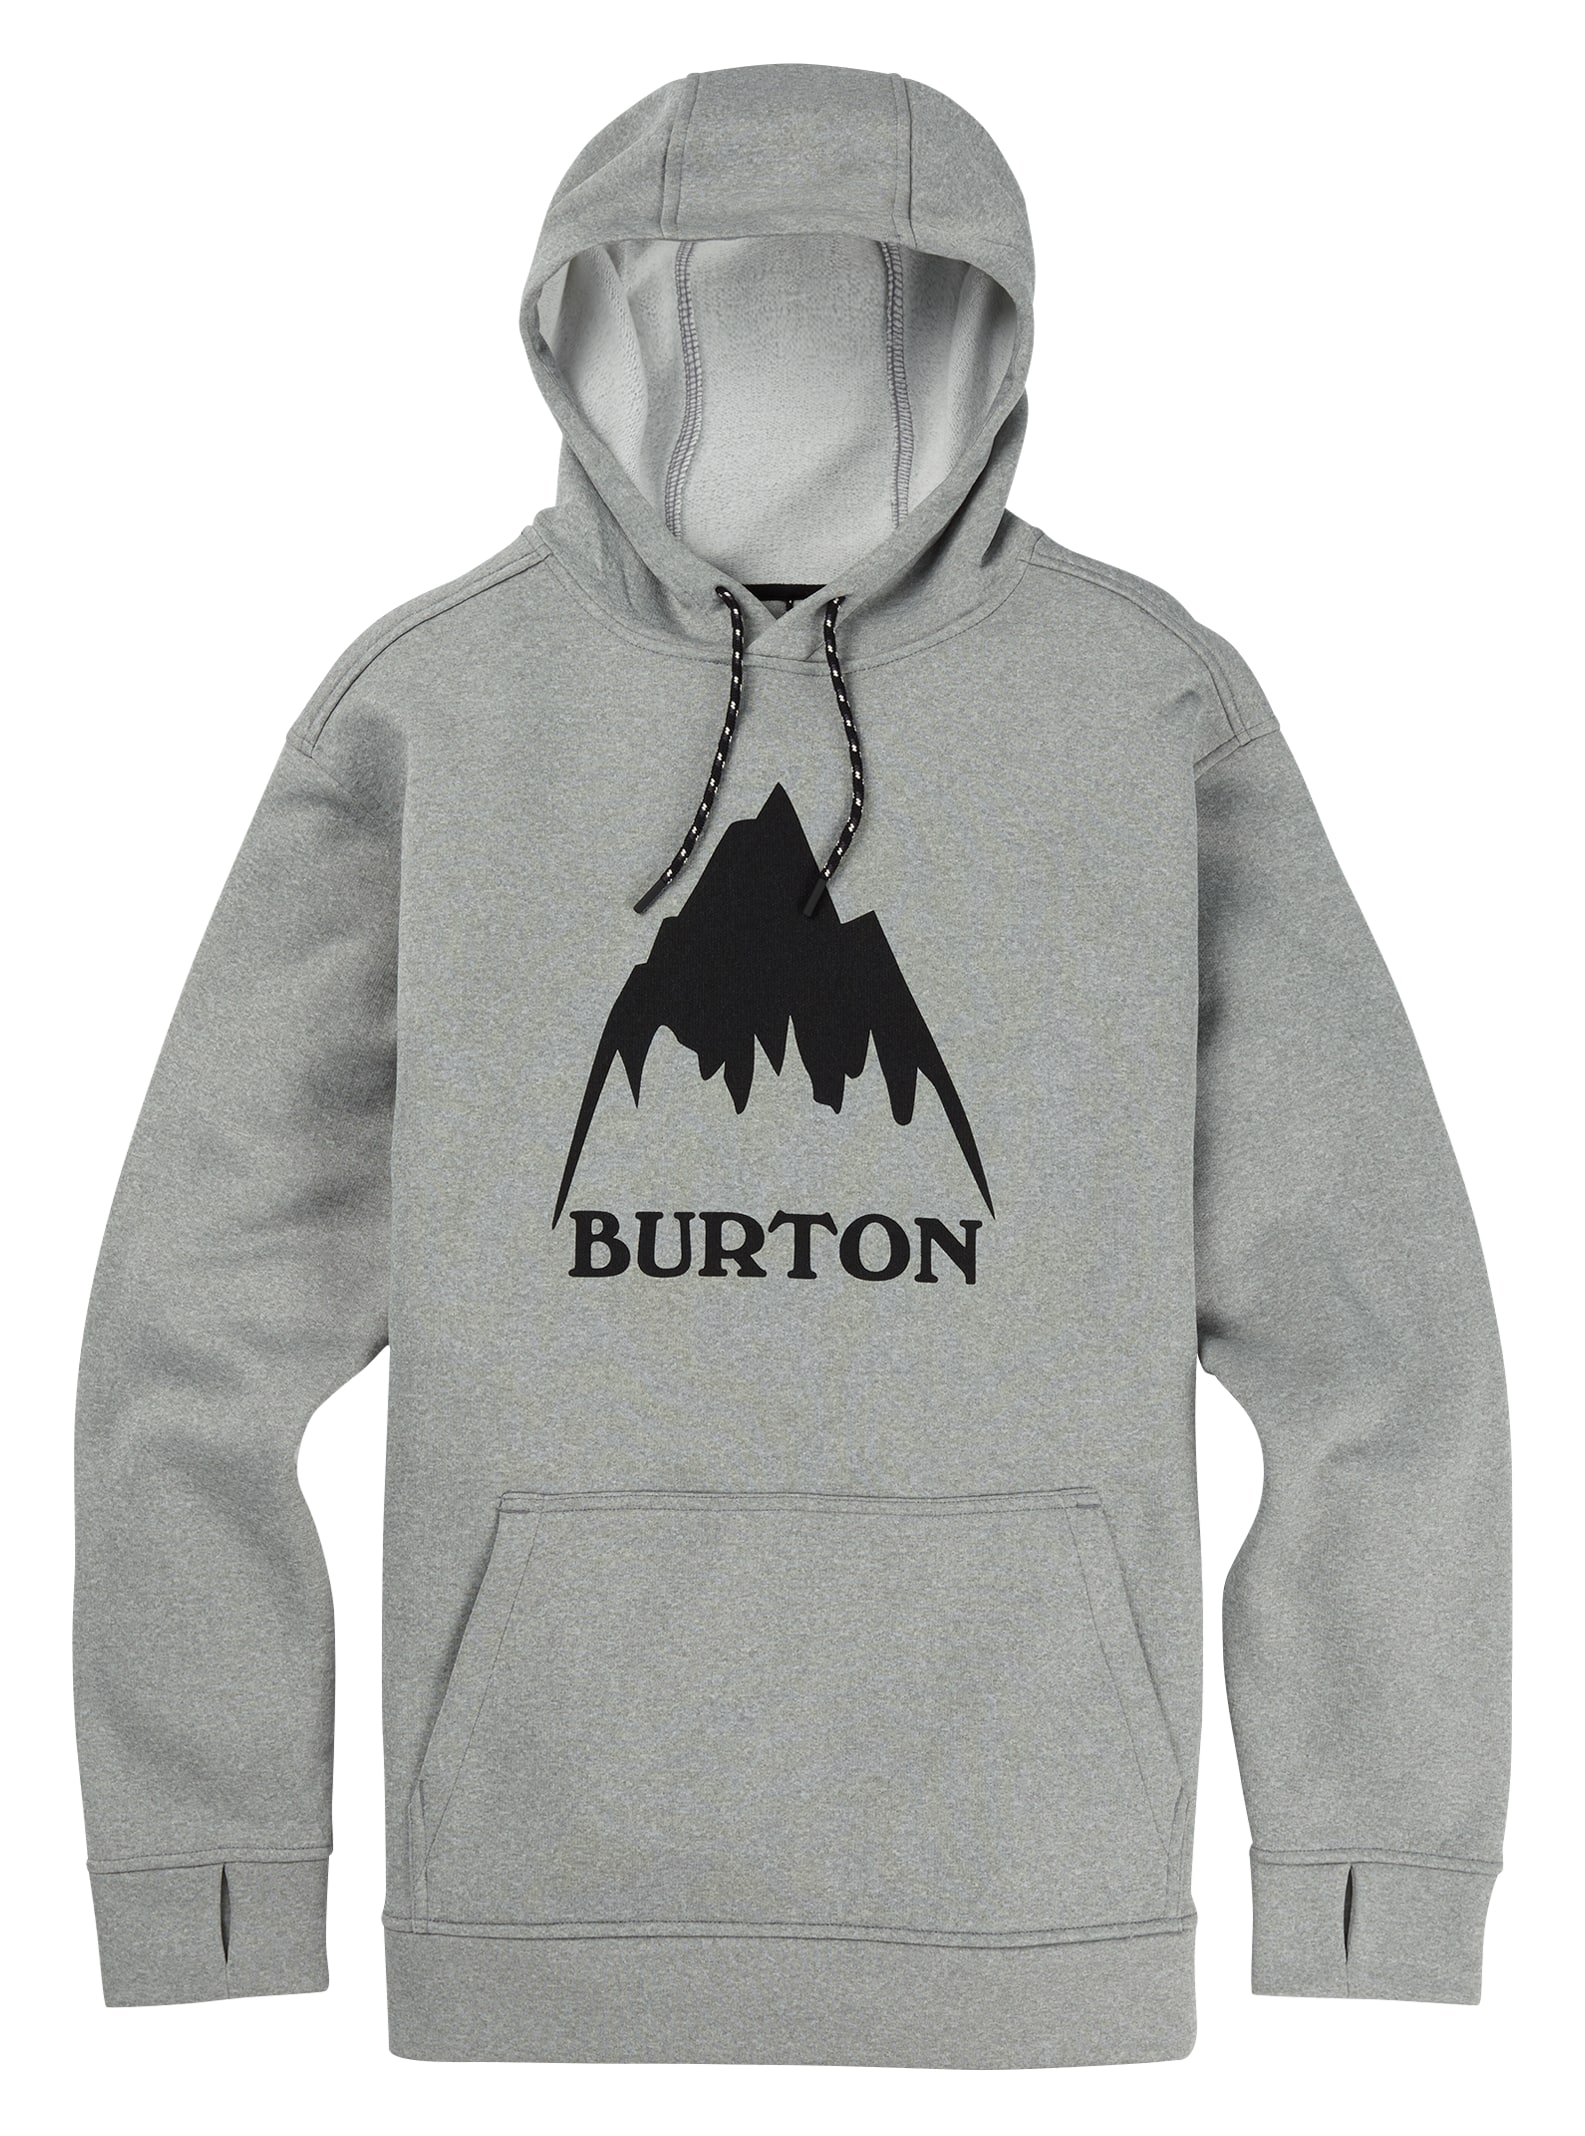 Burton Sweatshirt Online Sale, UP TO 51% OFF